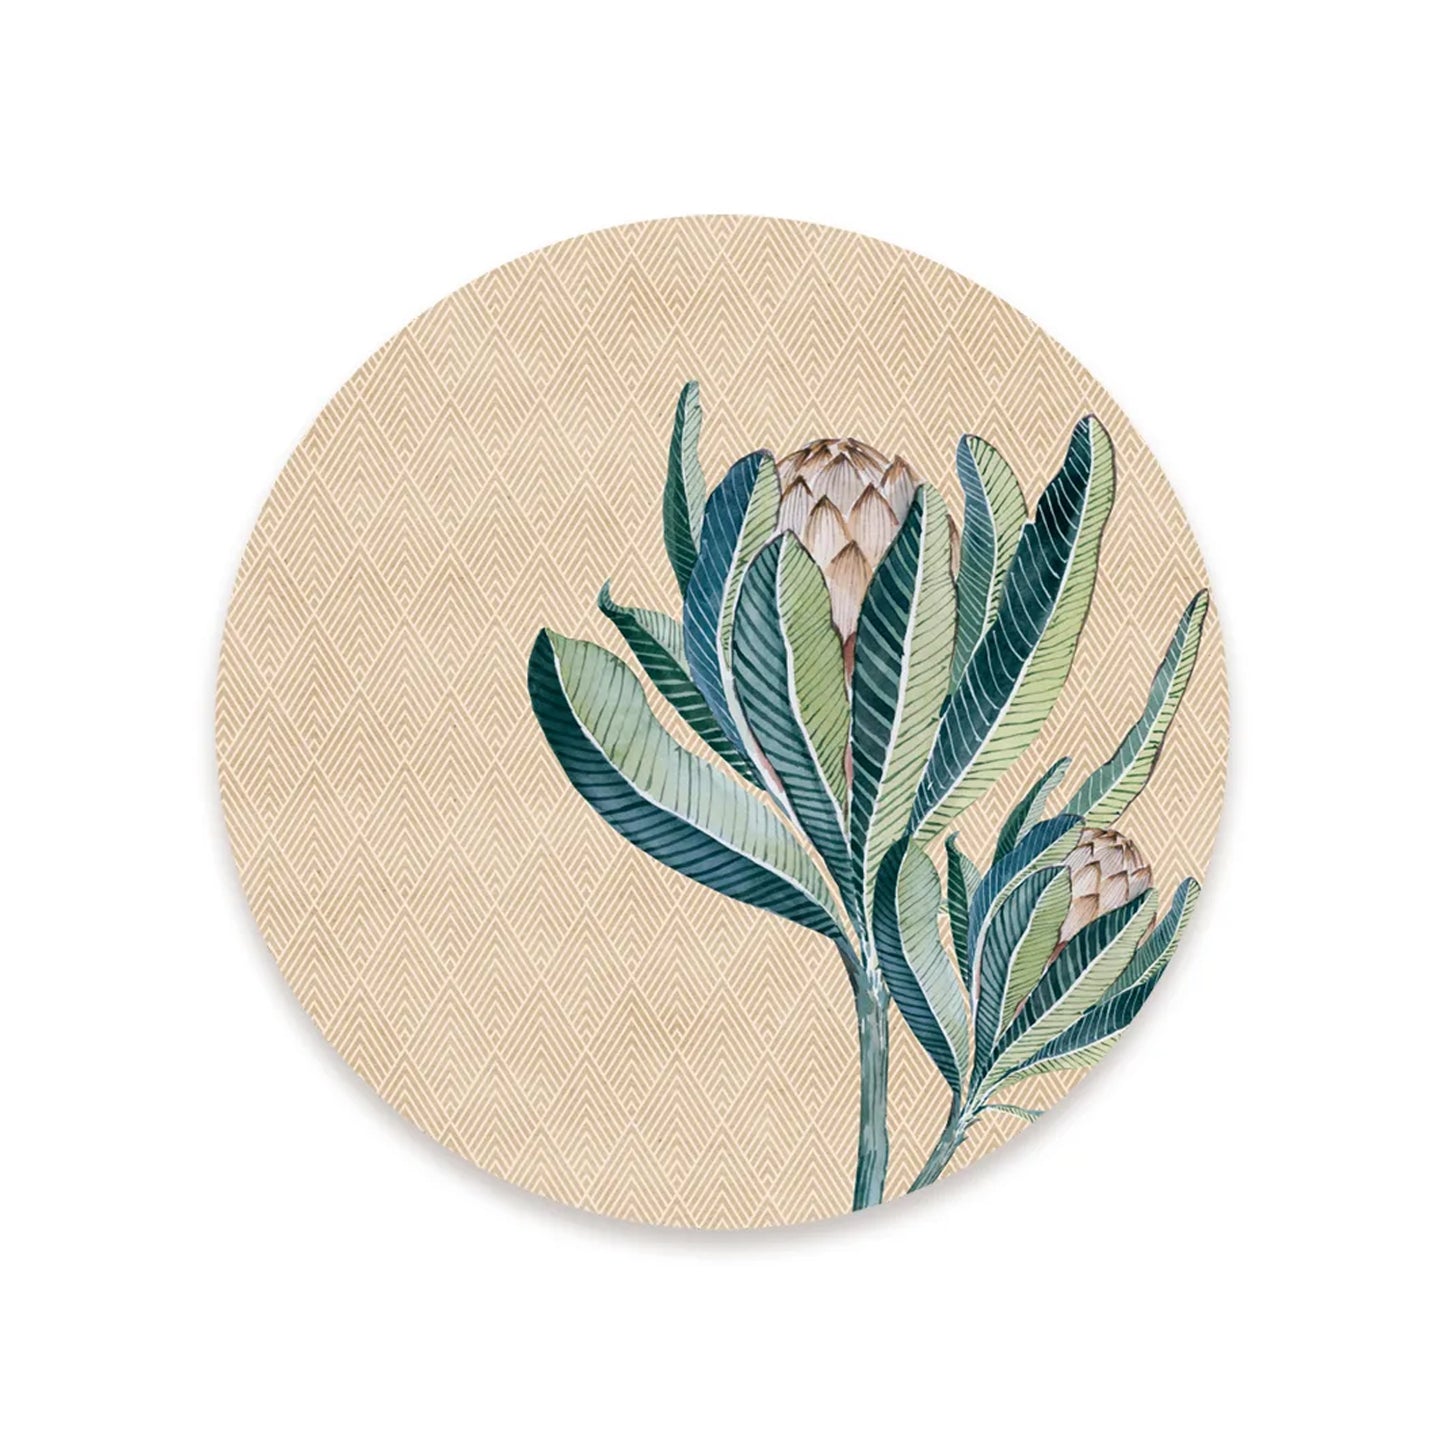 Proteas Flower Tablemats | TM 076 (set of 2)